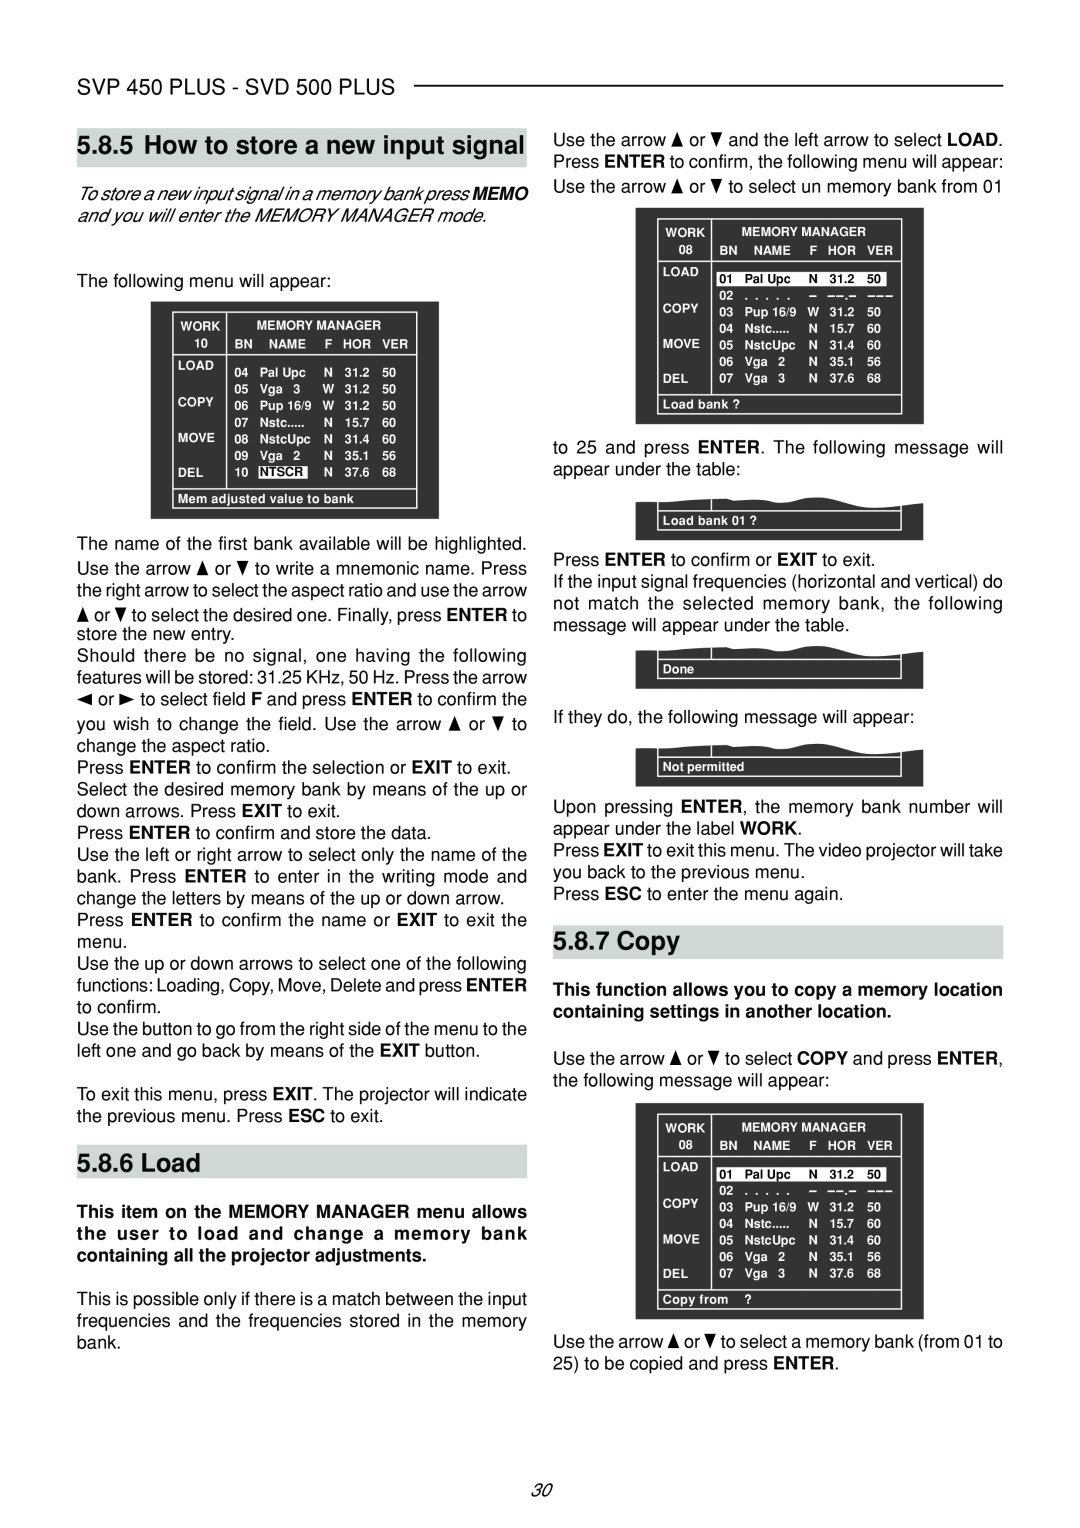 Sim2 Multimedia SVP 420 HB manual How to store a new input signal, Load, Copy, SVP 450 PLUS - SVD 500 PLUS 